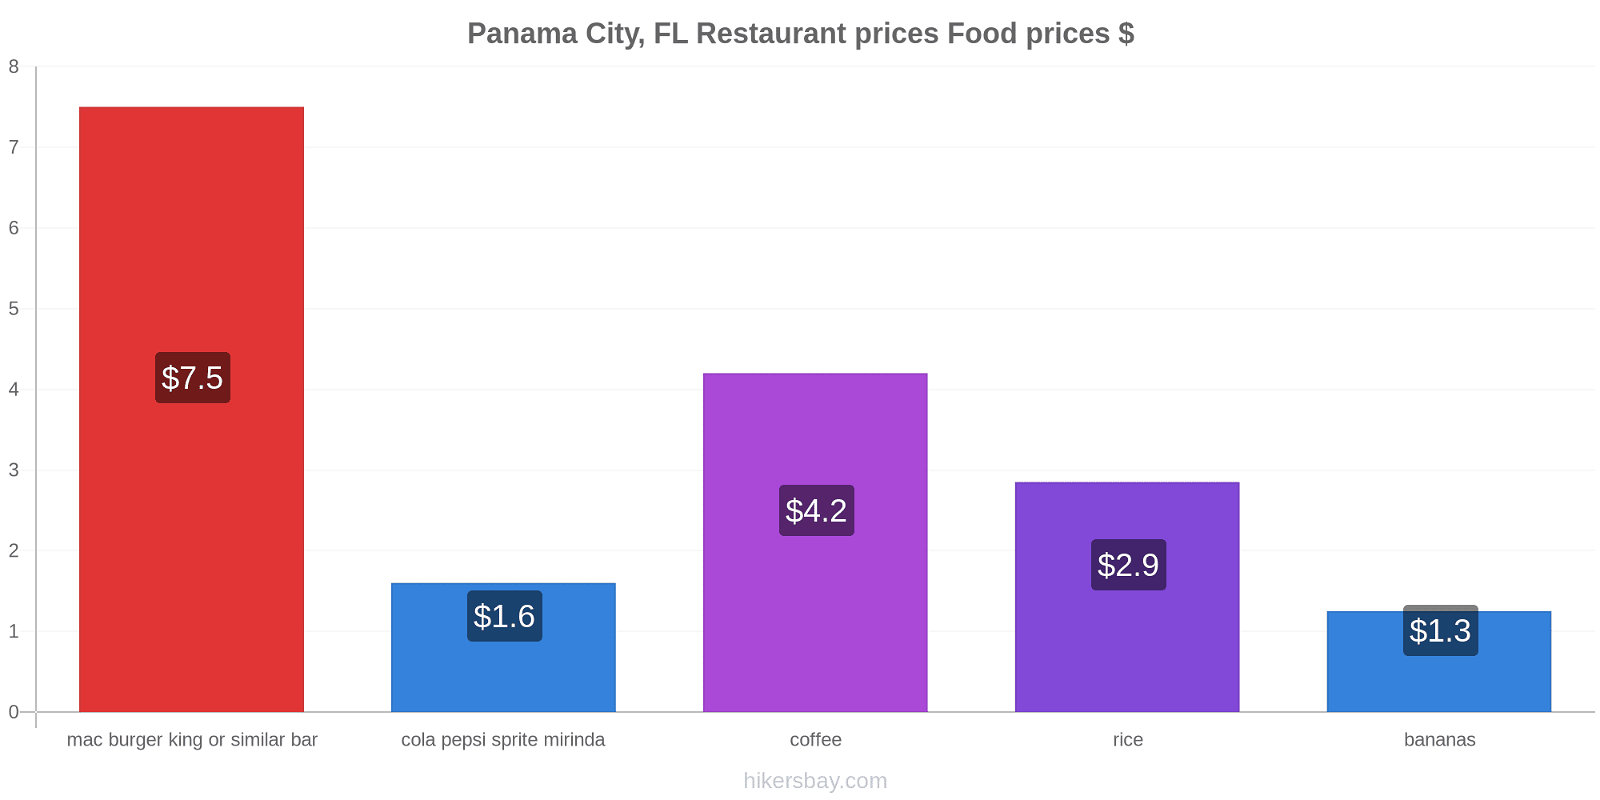 Panama City, FL price changes hikersbay.com